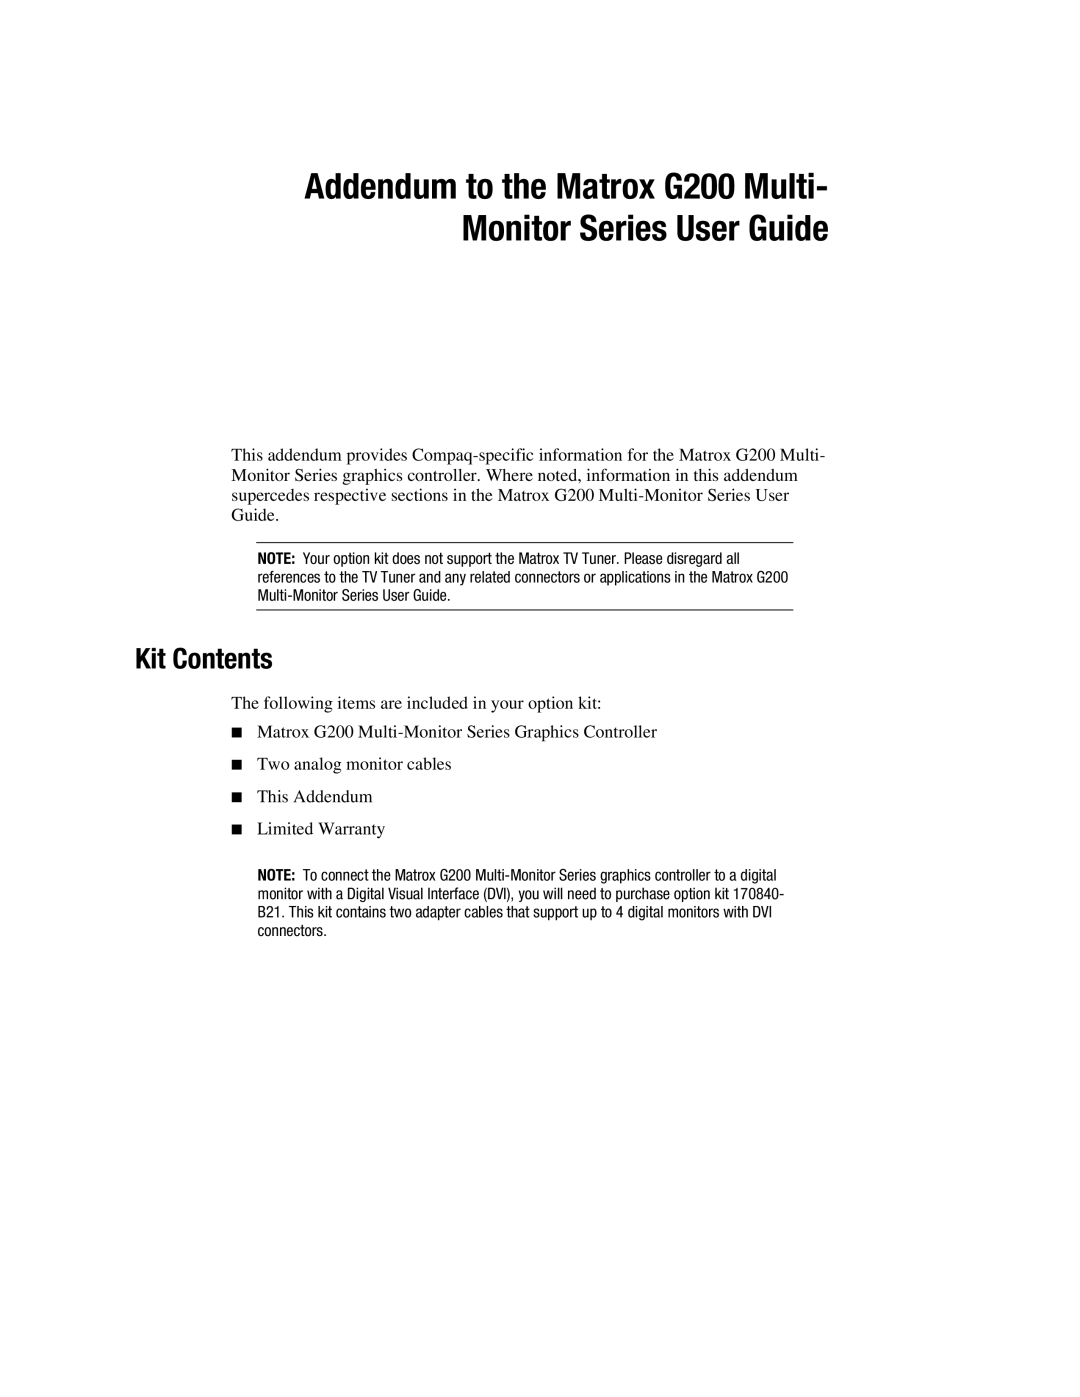 Compaq warranty Addendum to the Matrox G200 Multi- Monitor Series User Guide, Kit Contents 